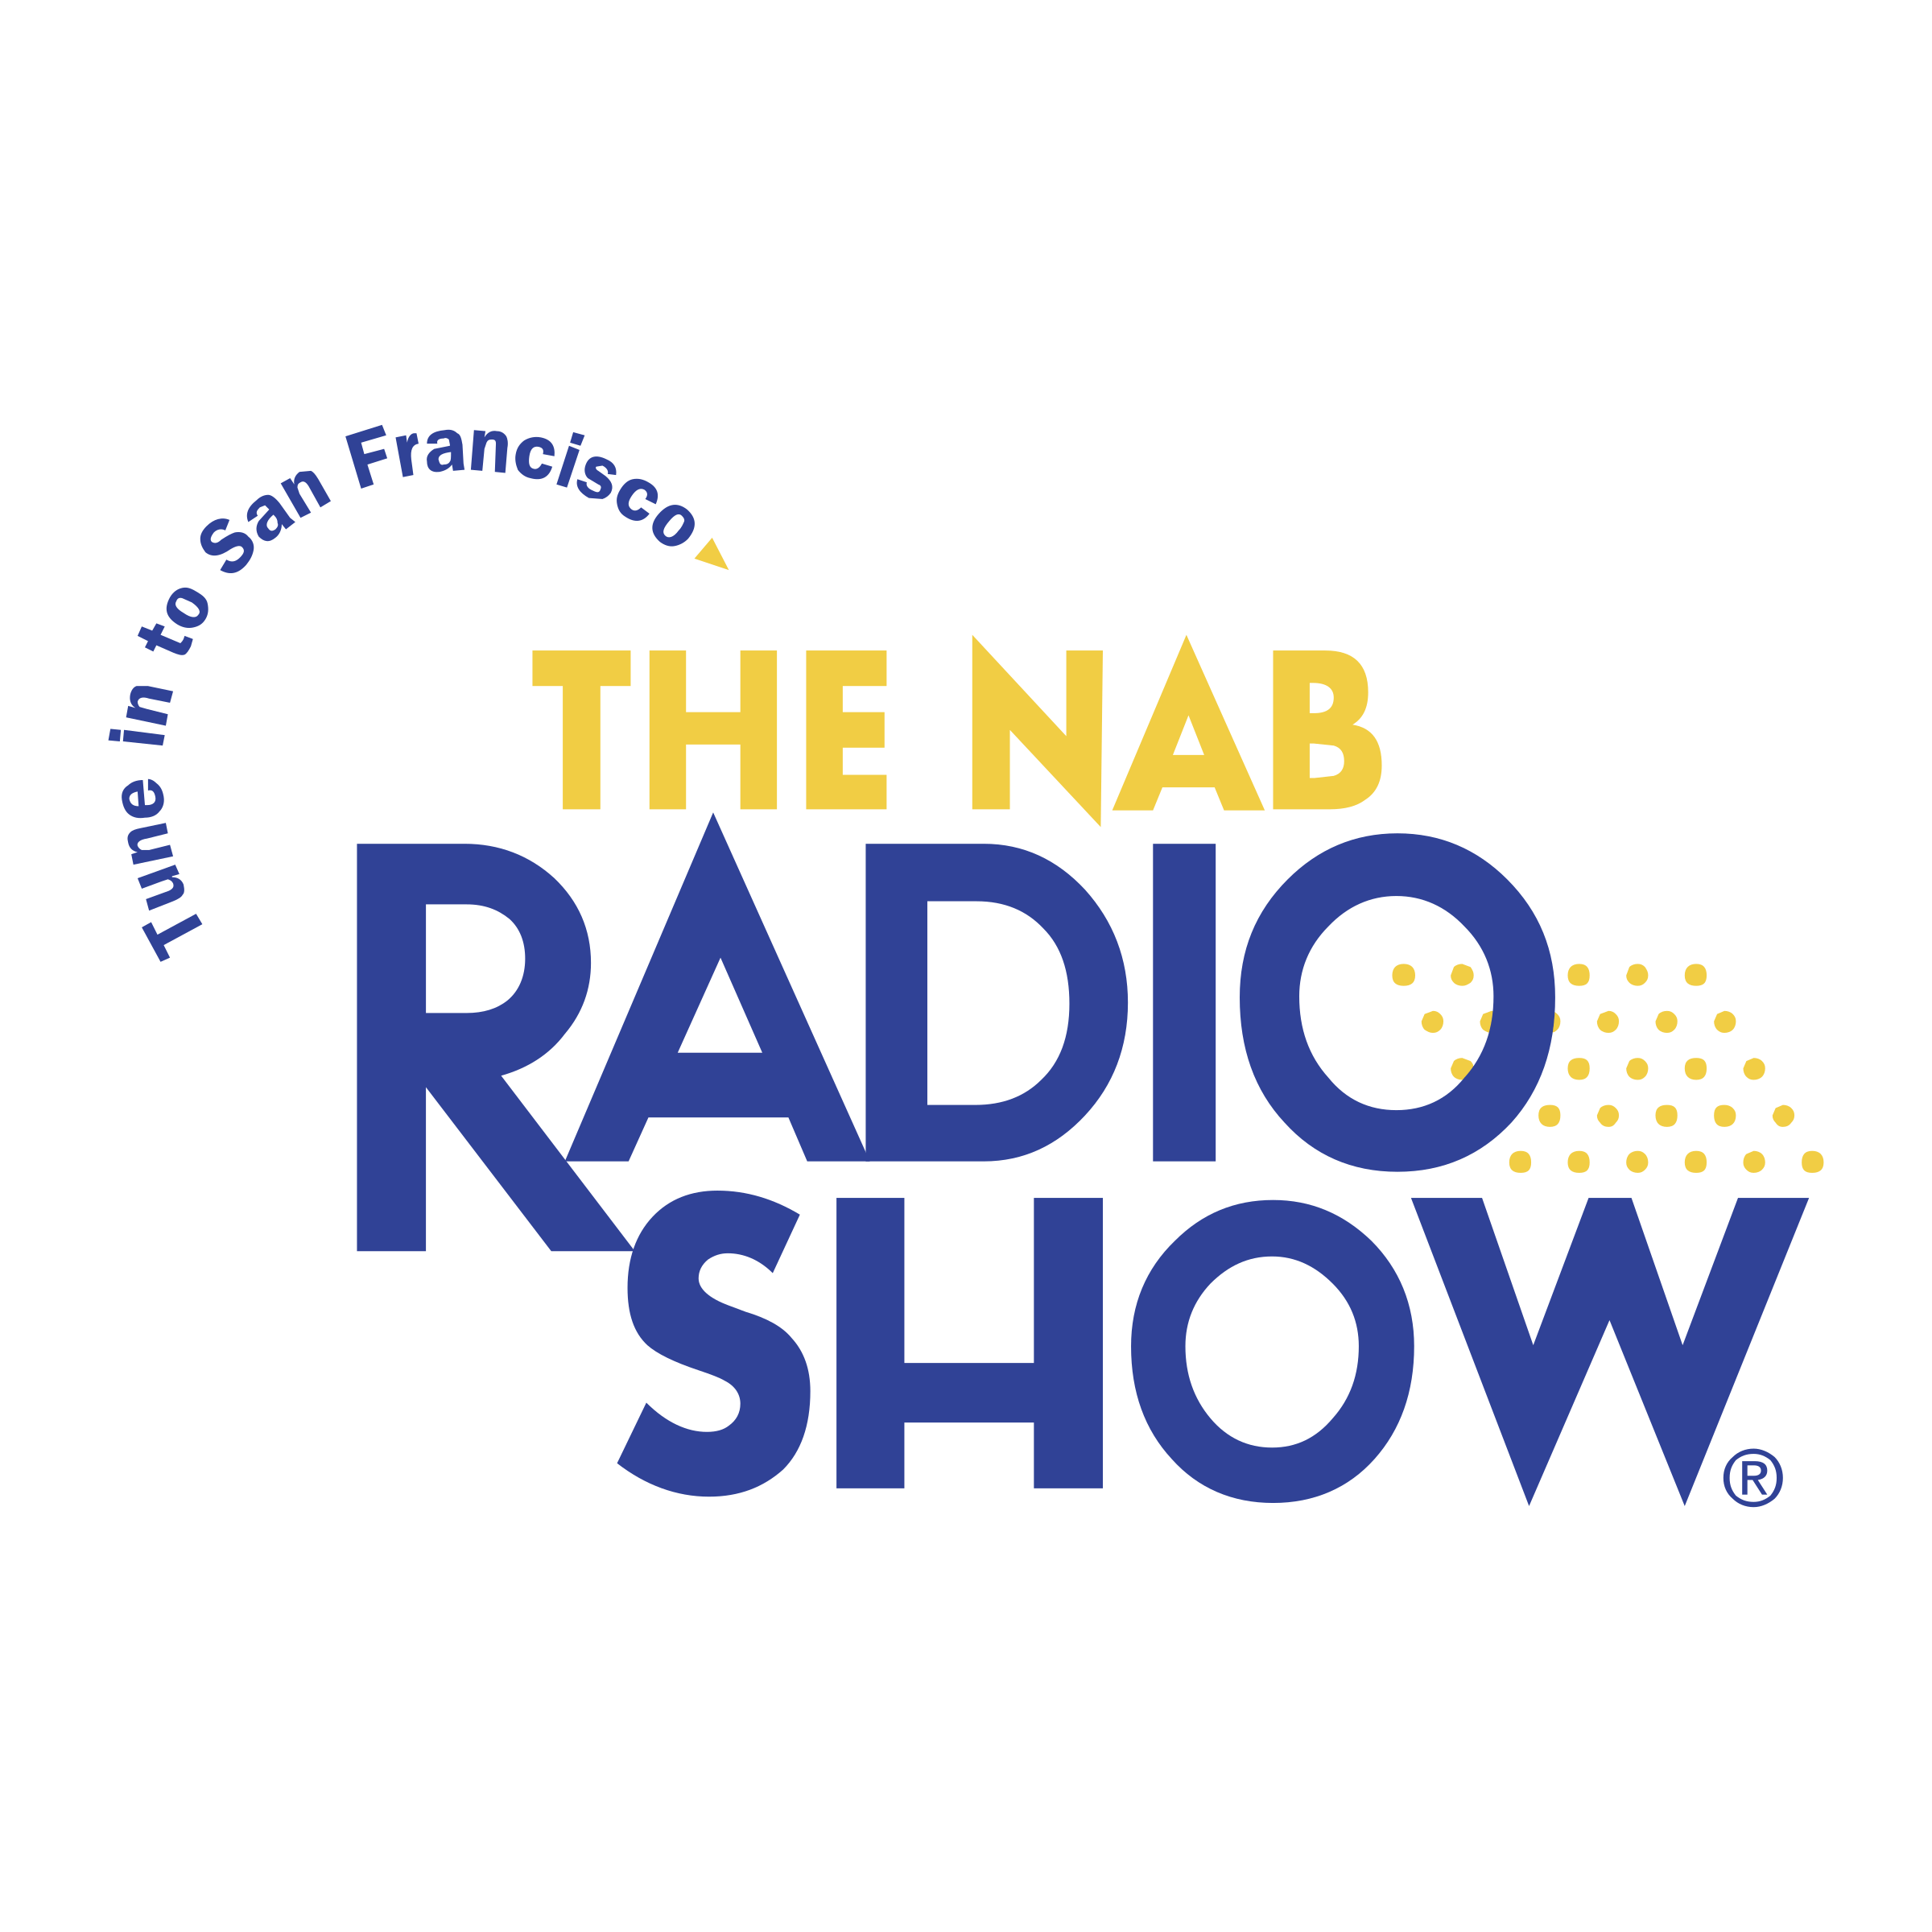 Radio Show Logo - The NAB Radio Show Logo PNG Transparent & SVG Vector